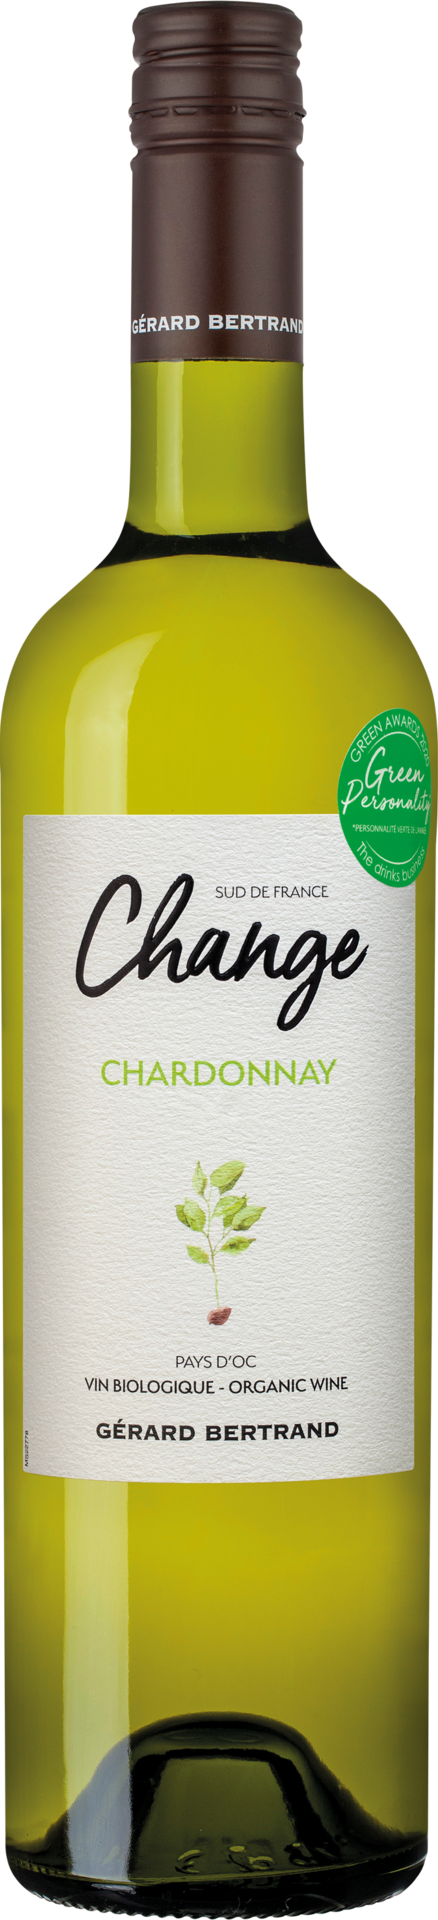 Change Chardonnay